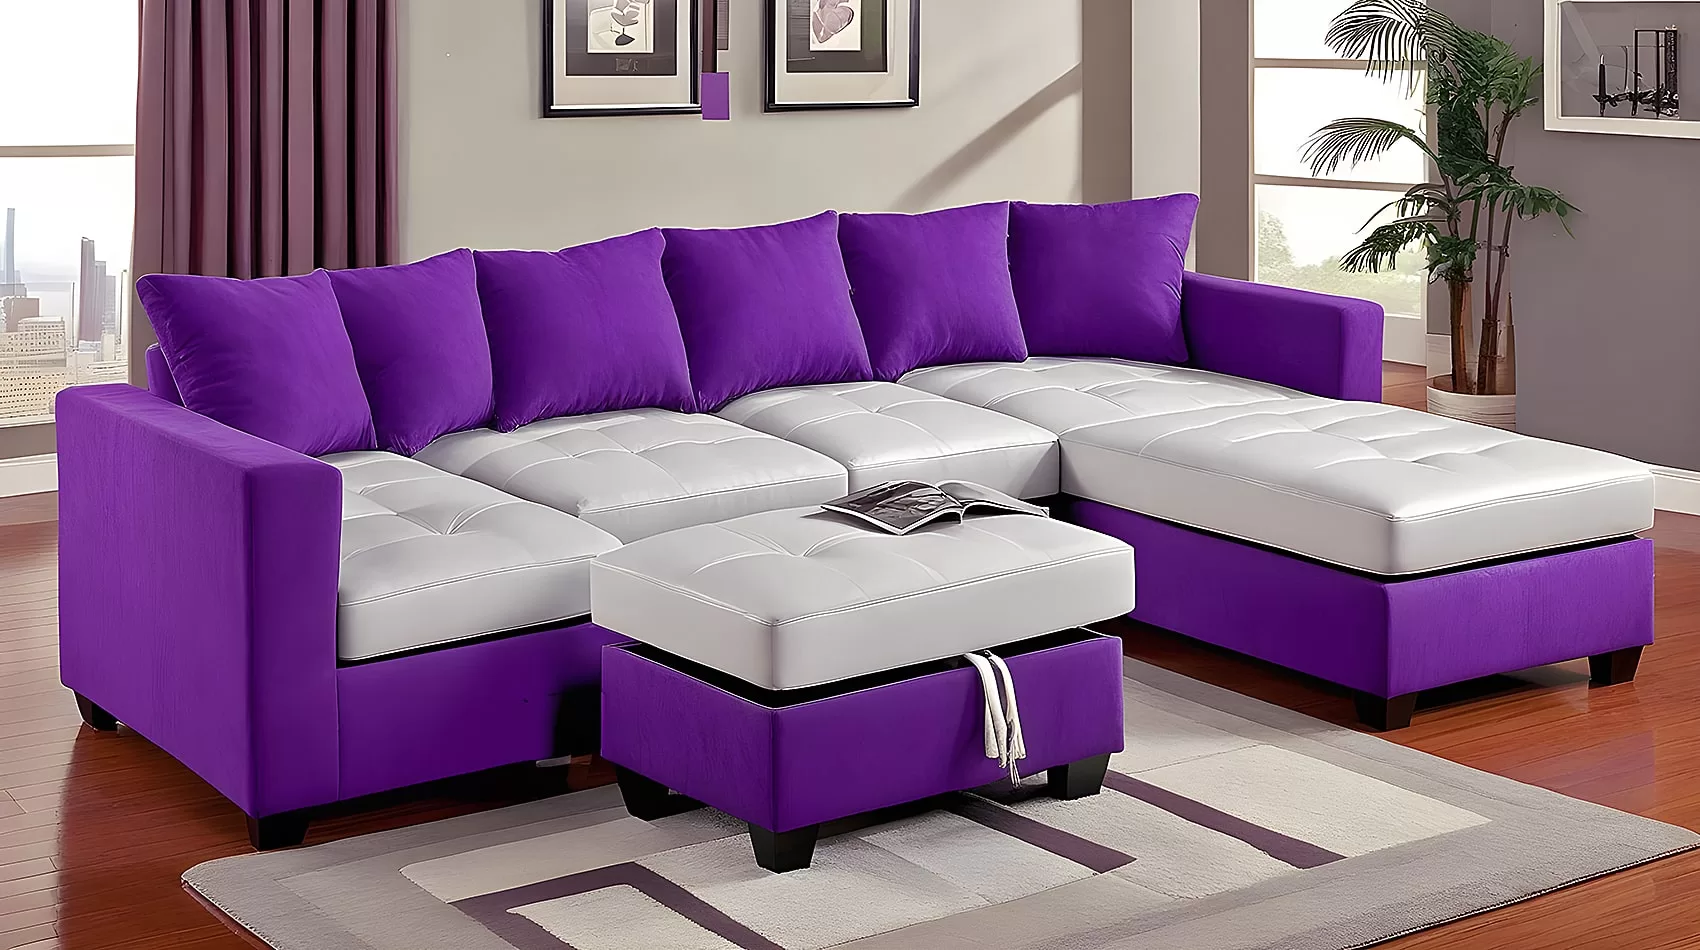 Purple Couch Sectional Copy Min Jpg.webp